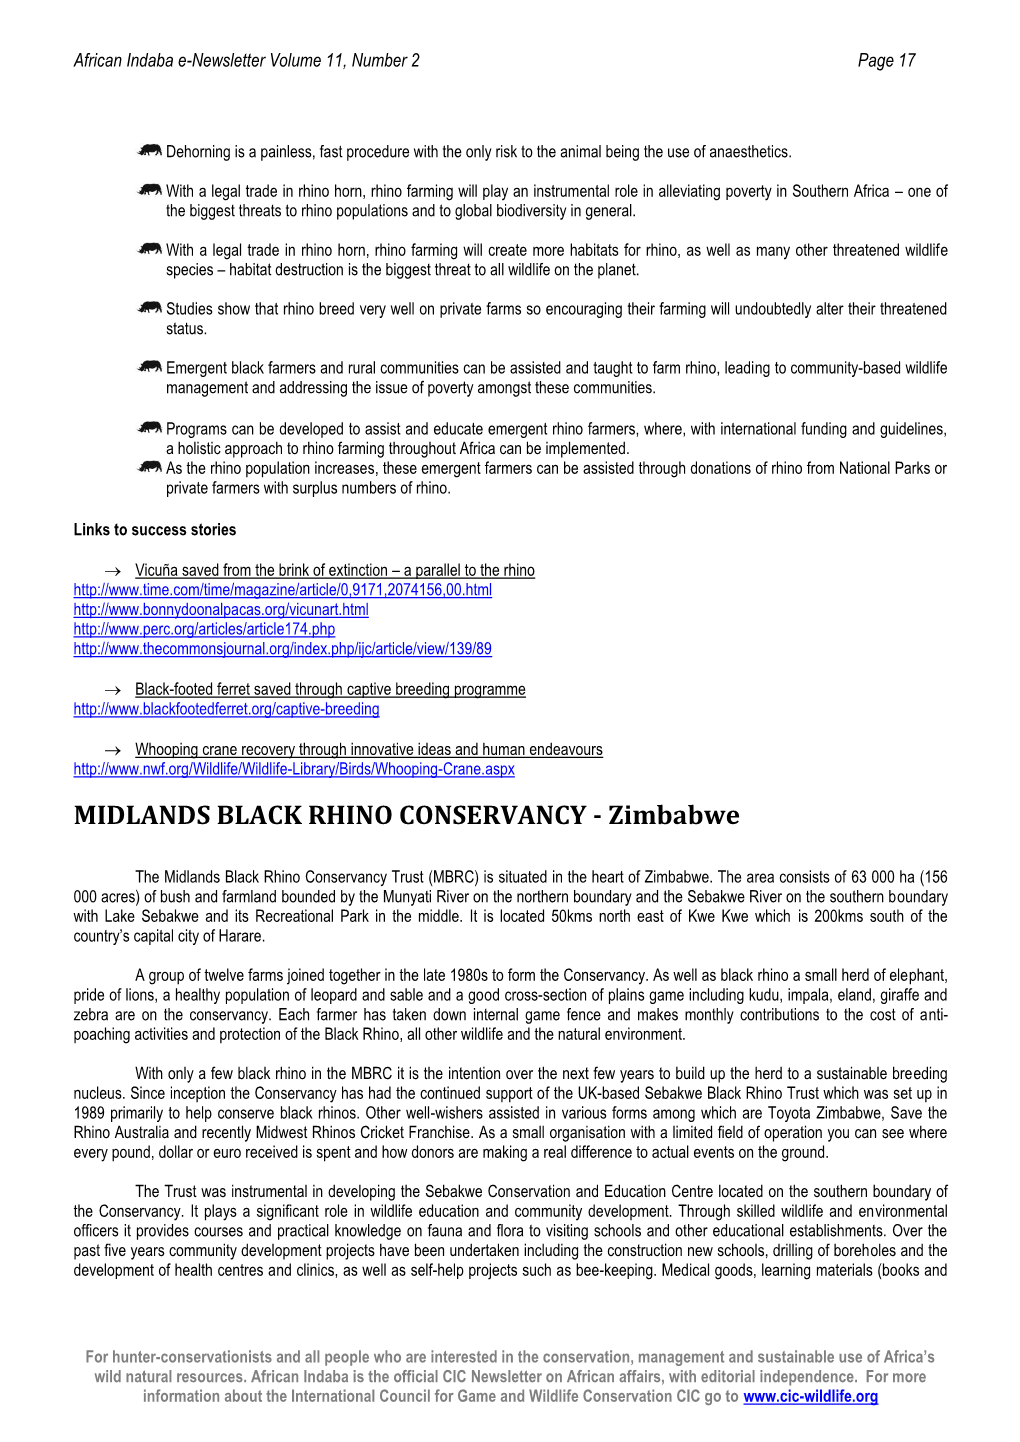 MIDLANDS BLACK RHINO CONSERVANCY - Zimbabwe